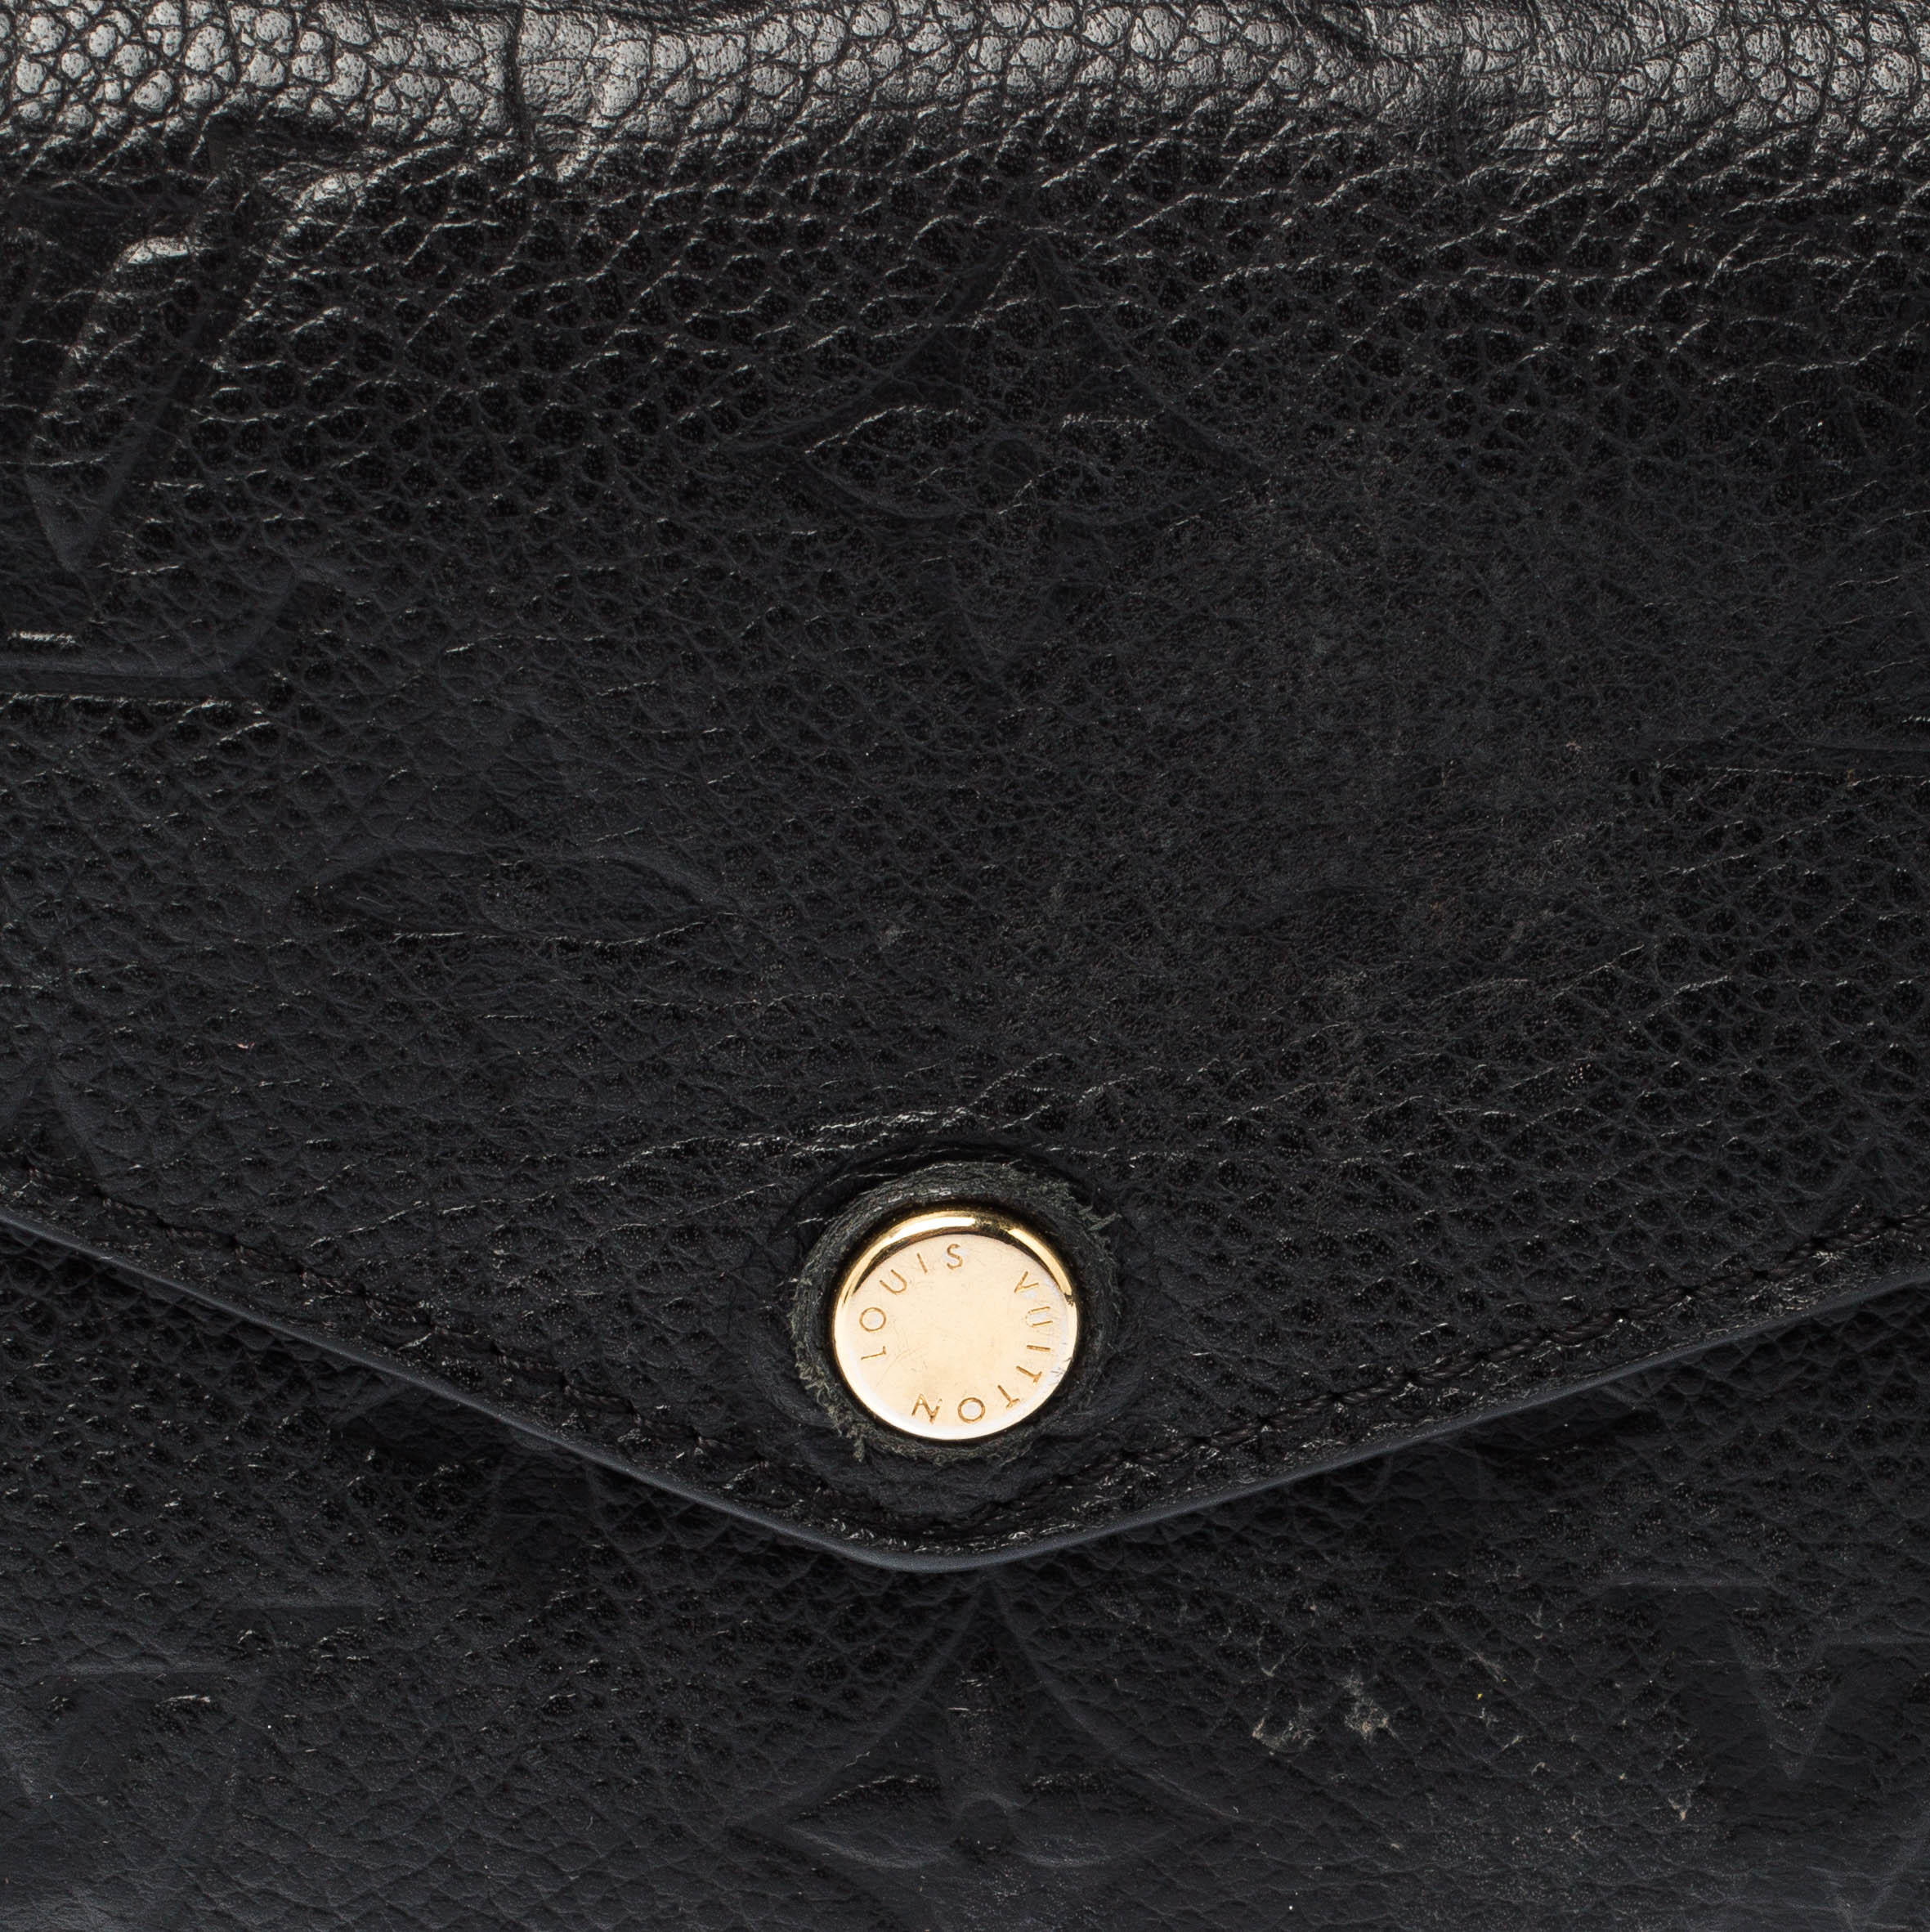 Cléa Wallet Monogram Empreinte Leather - Women - Small Leather Goods